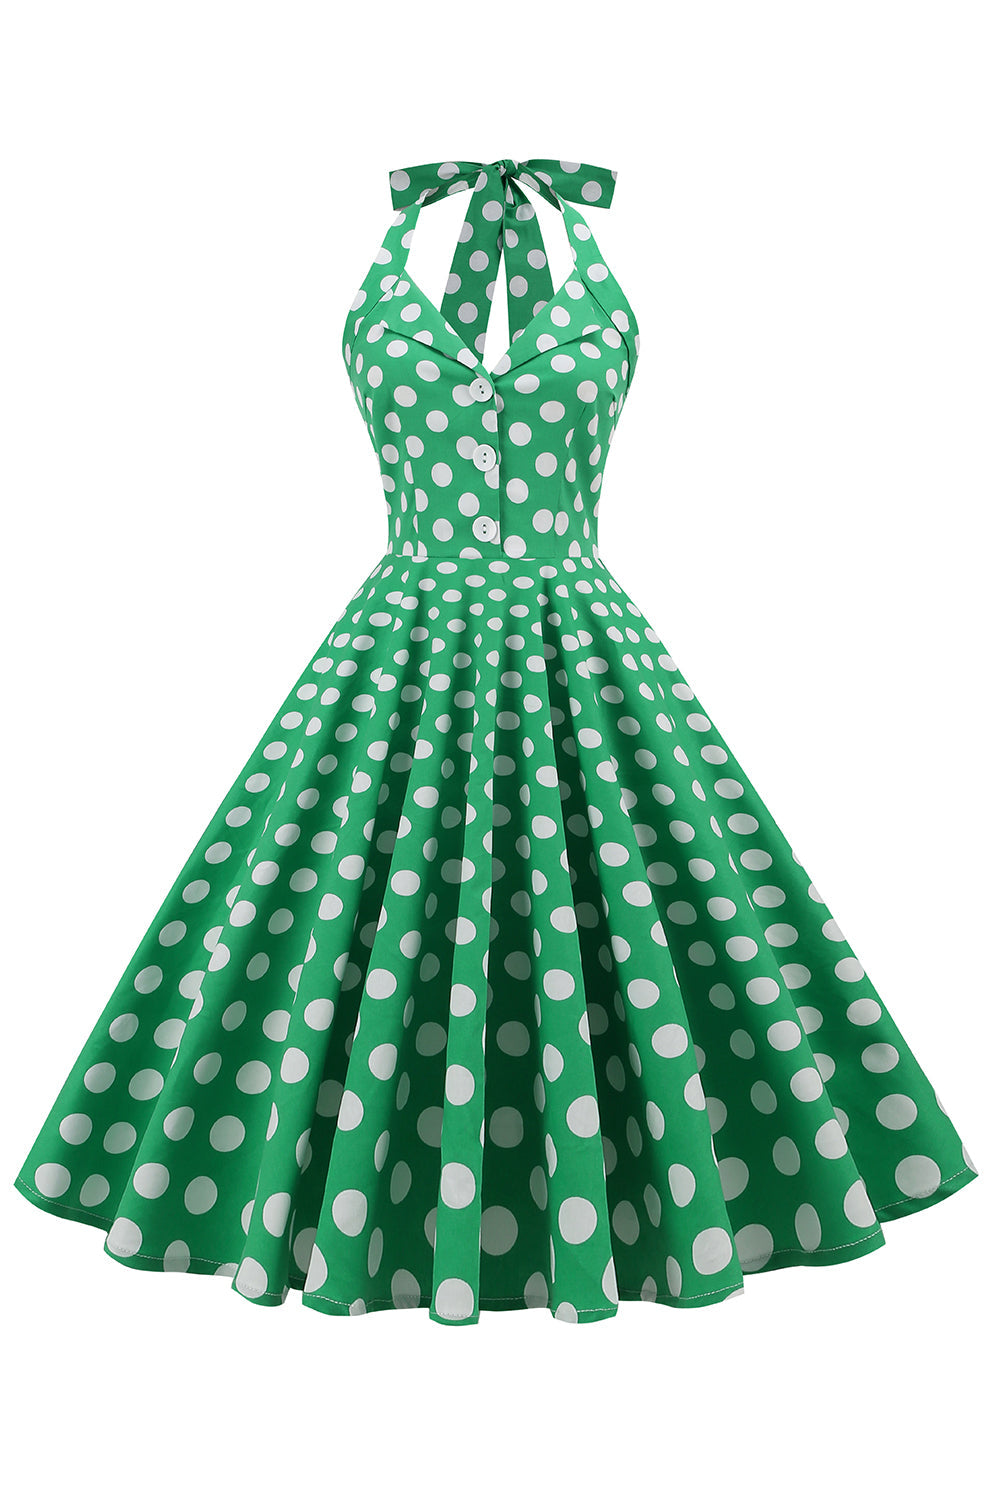 Groene Halter Polka Dots jaren 1950 Jurk